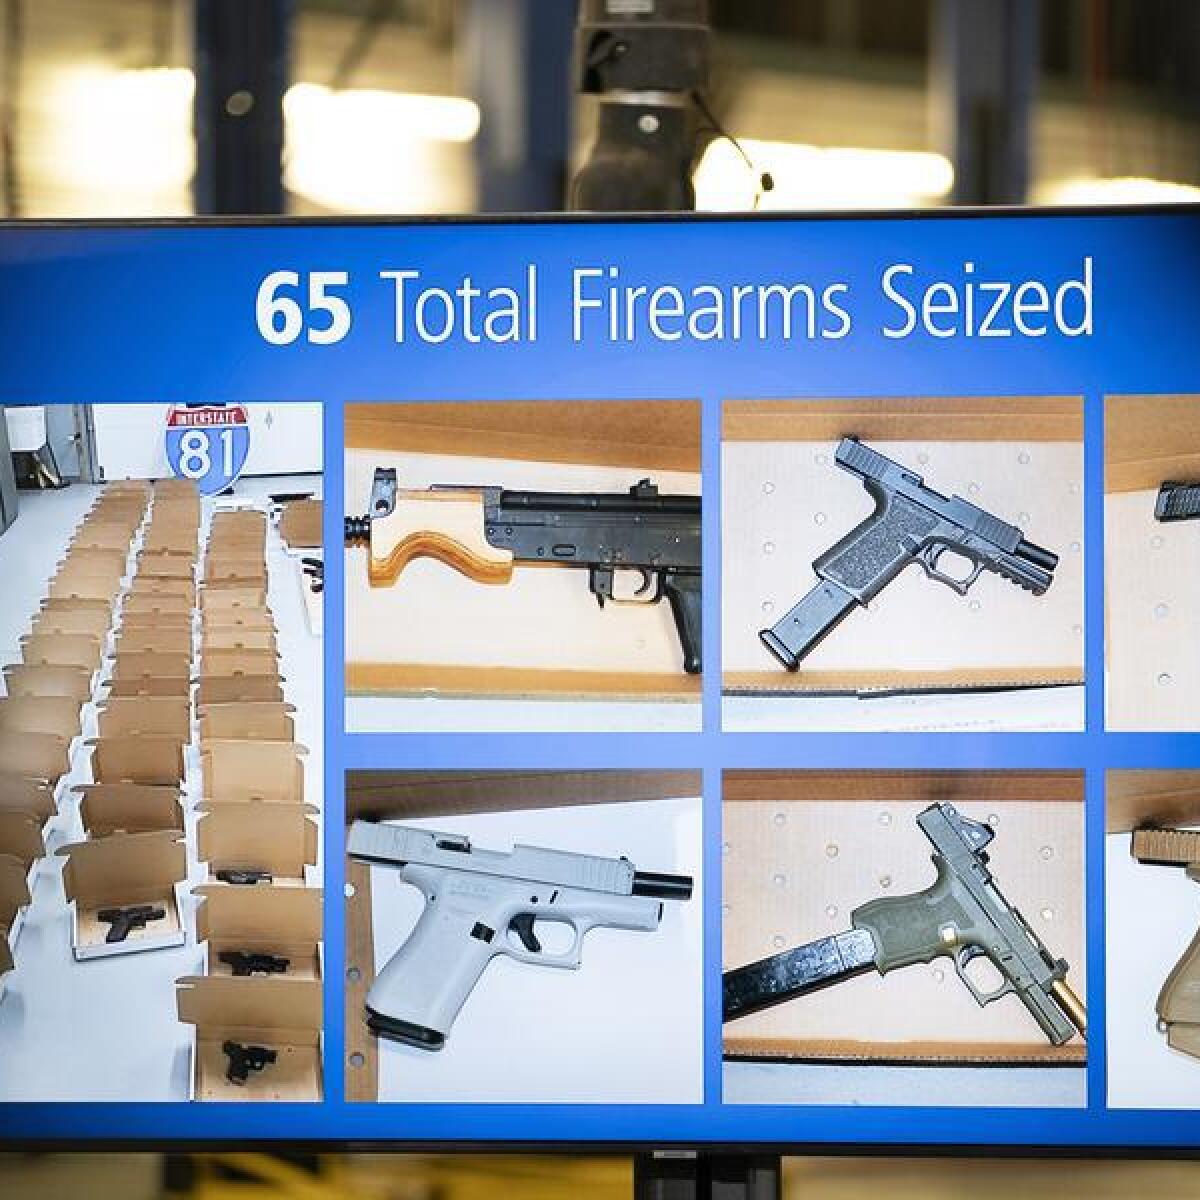 Firearms seized in Canada probe